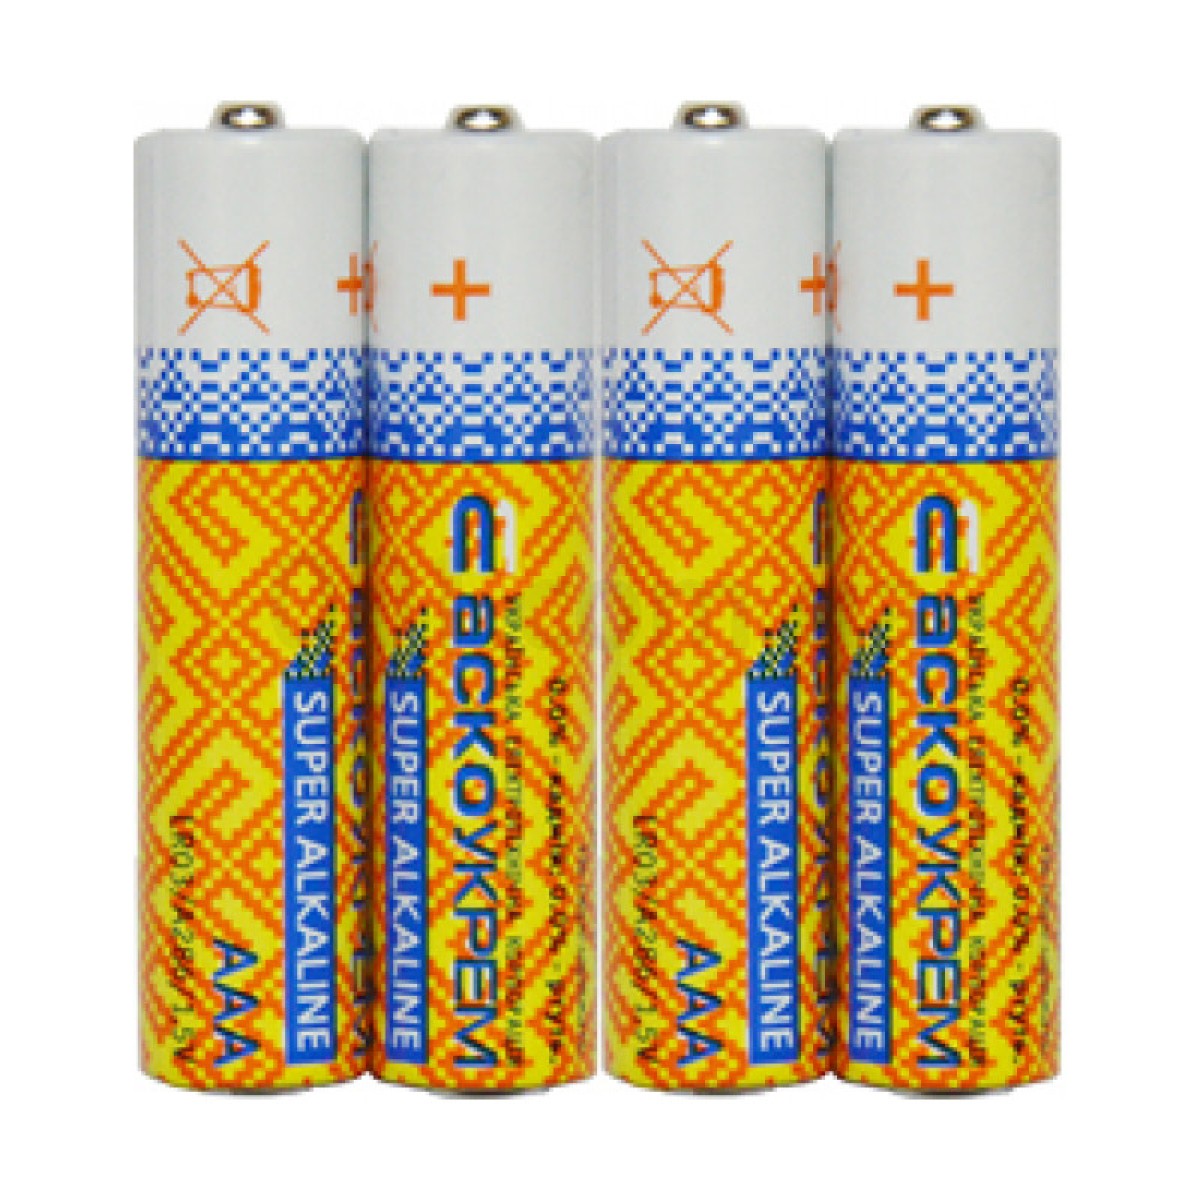 Батарейка лужна AАА.LR03.SP4, типорозмір AAA упаковка shrink 4 шт., АСКО-УКРЕМ 256_256.jpg